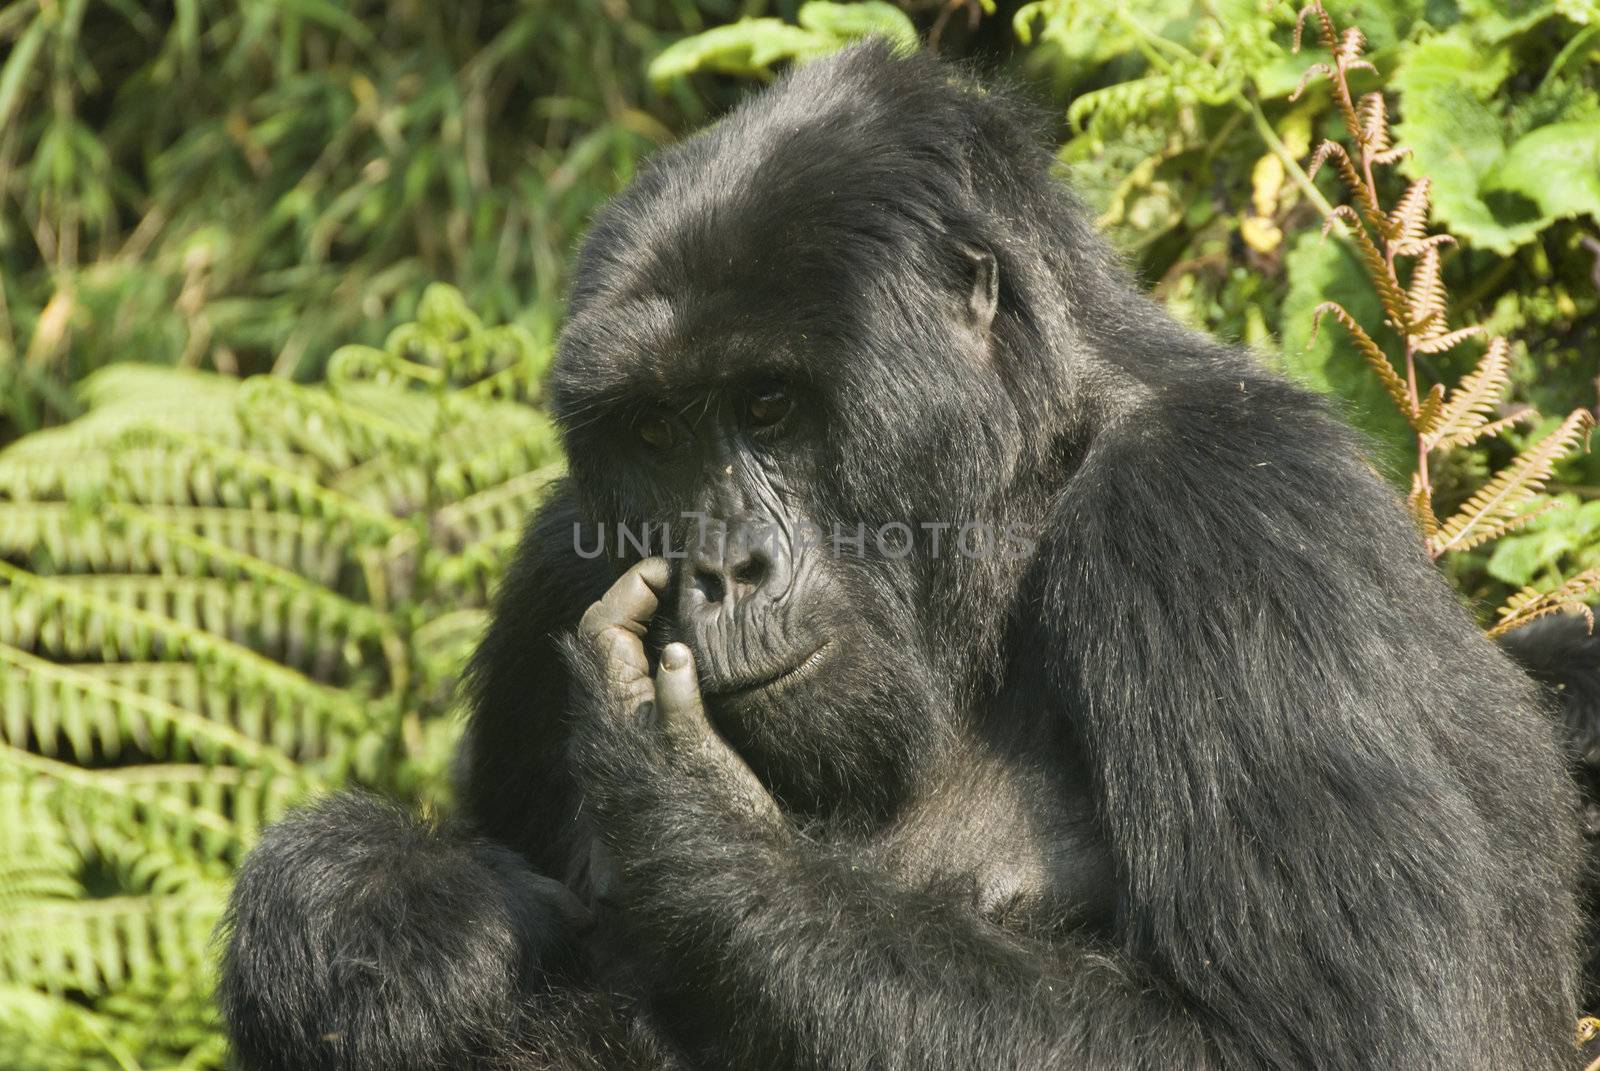 Close up on a gorilla scratching it's face, Rwanda